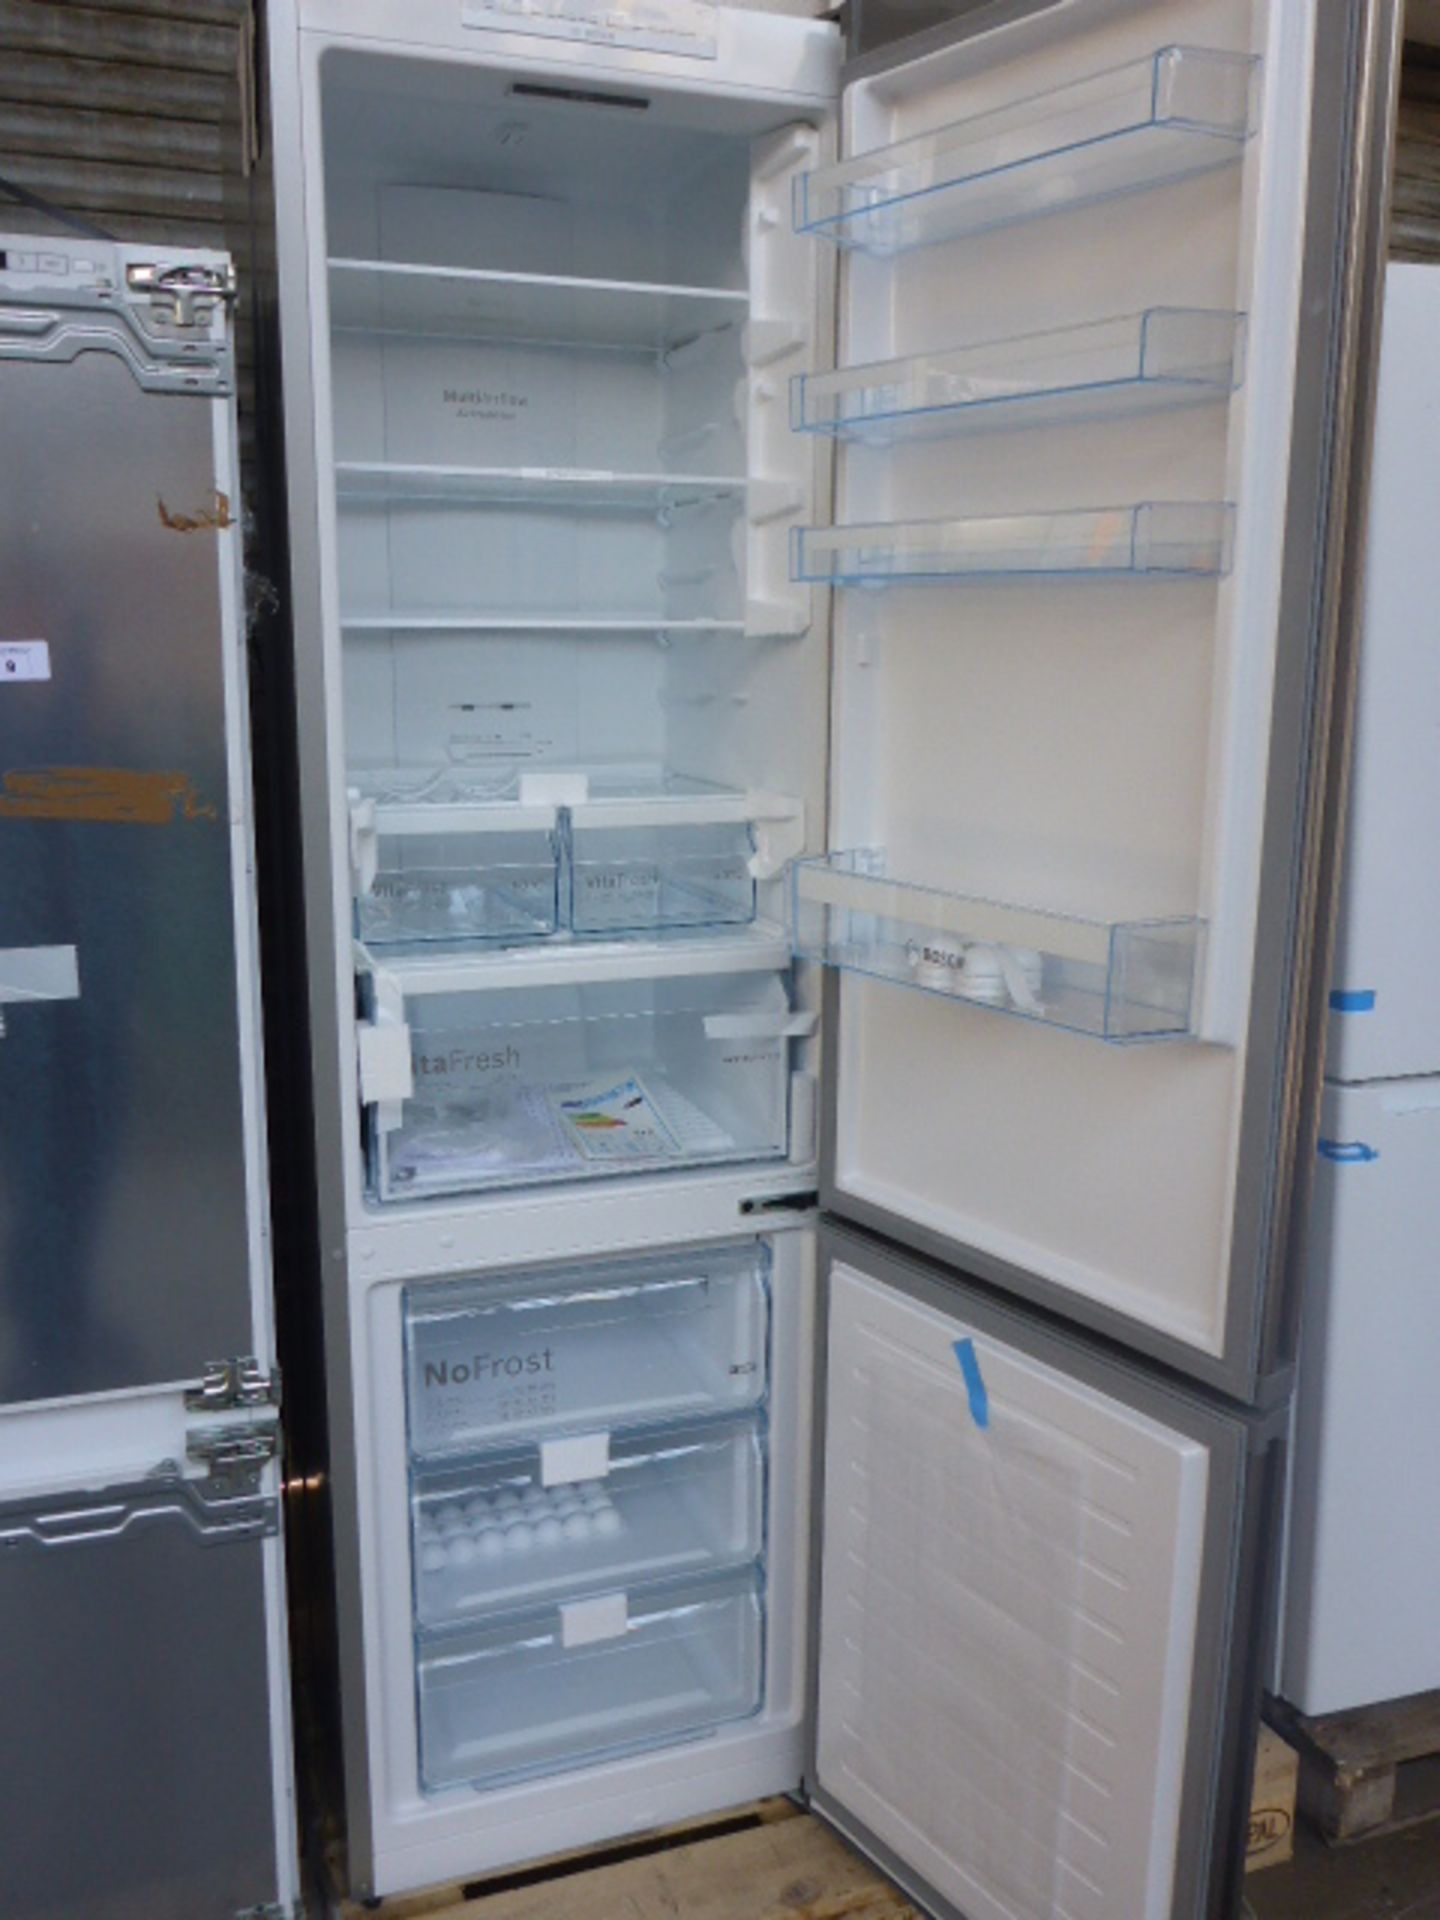 KGN39VL35GB Bosch Free-standing fridge-freezer - Image 2 of 2